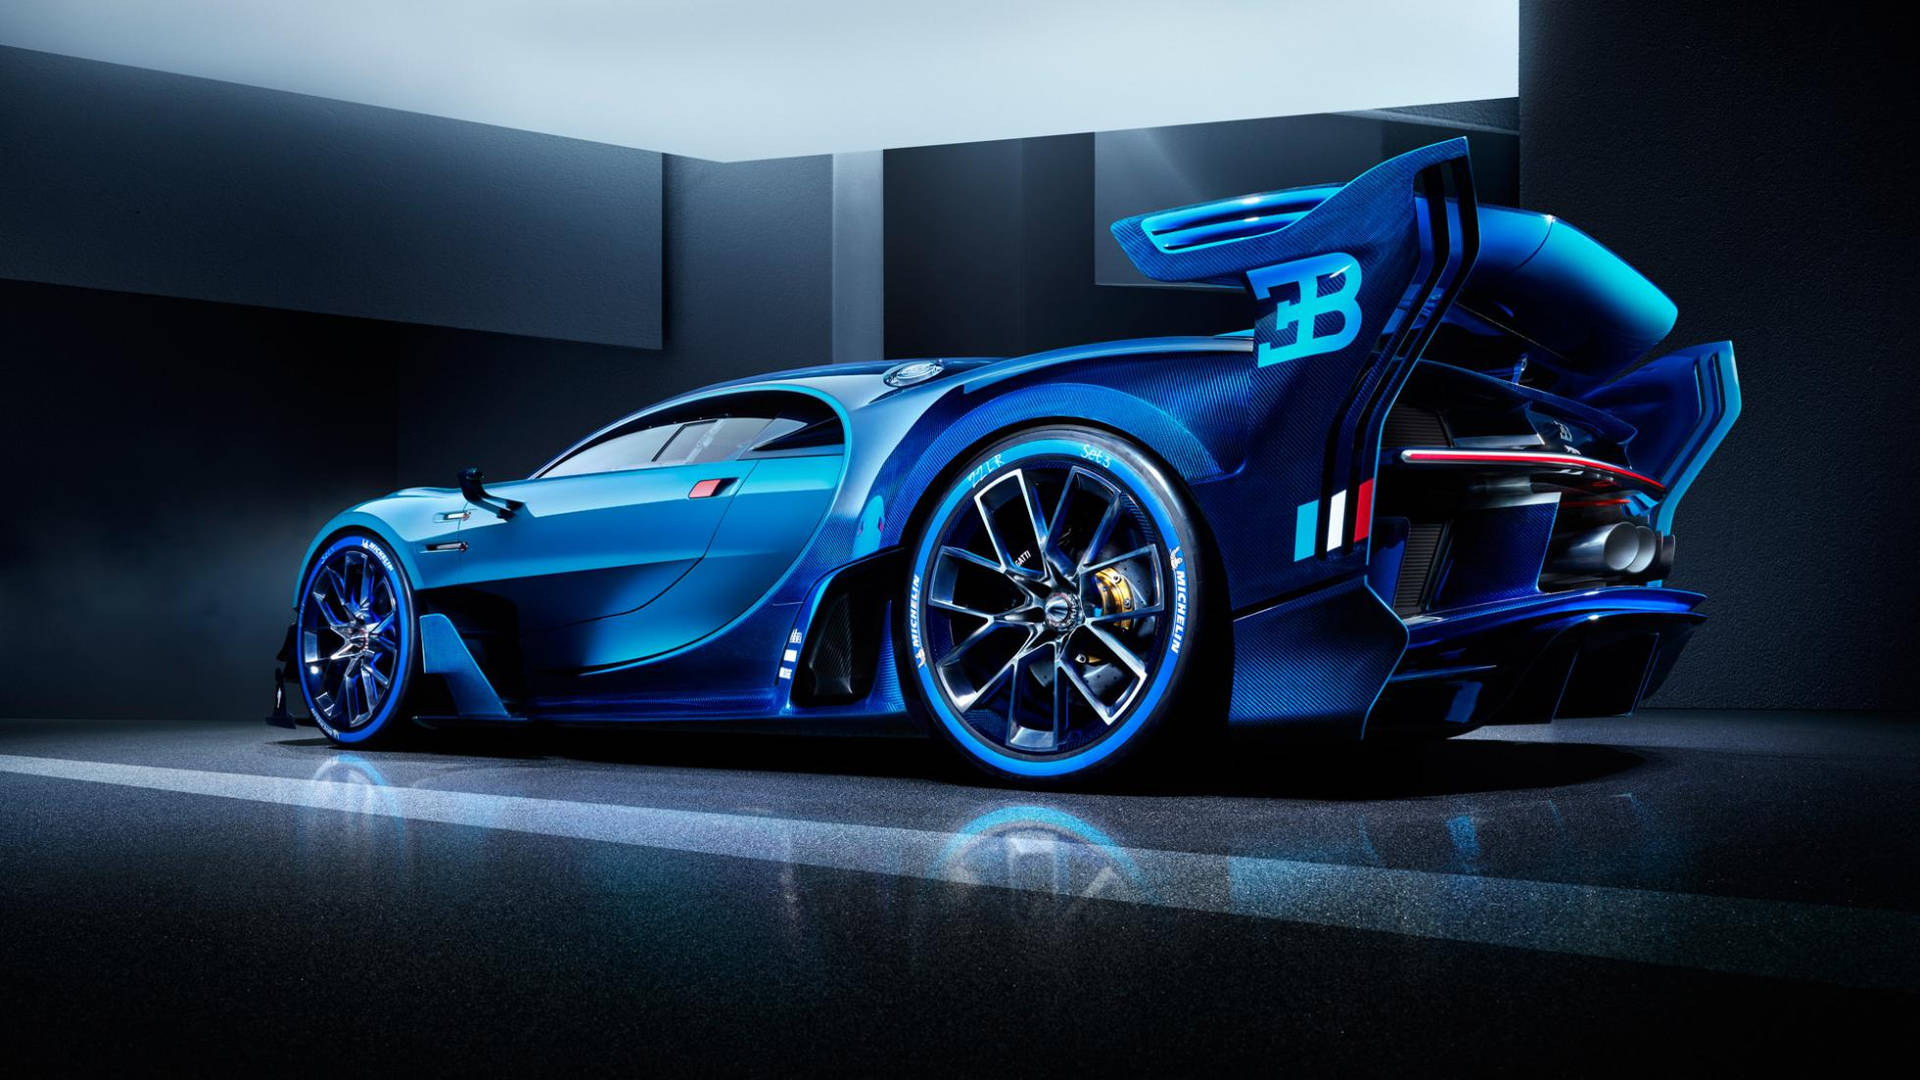 Bugatti3b Blå Sportbil (computer Eller Mobilskärmsbakgrund) Wallpaper